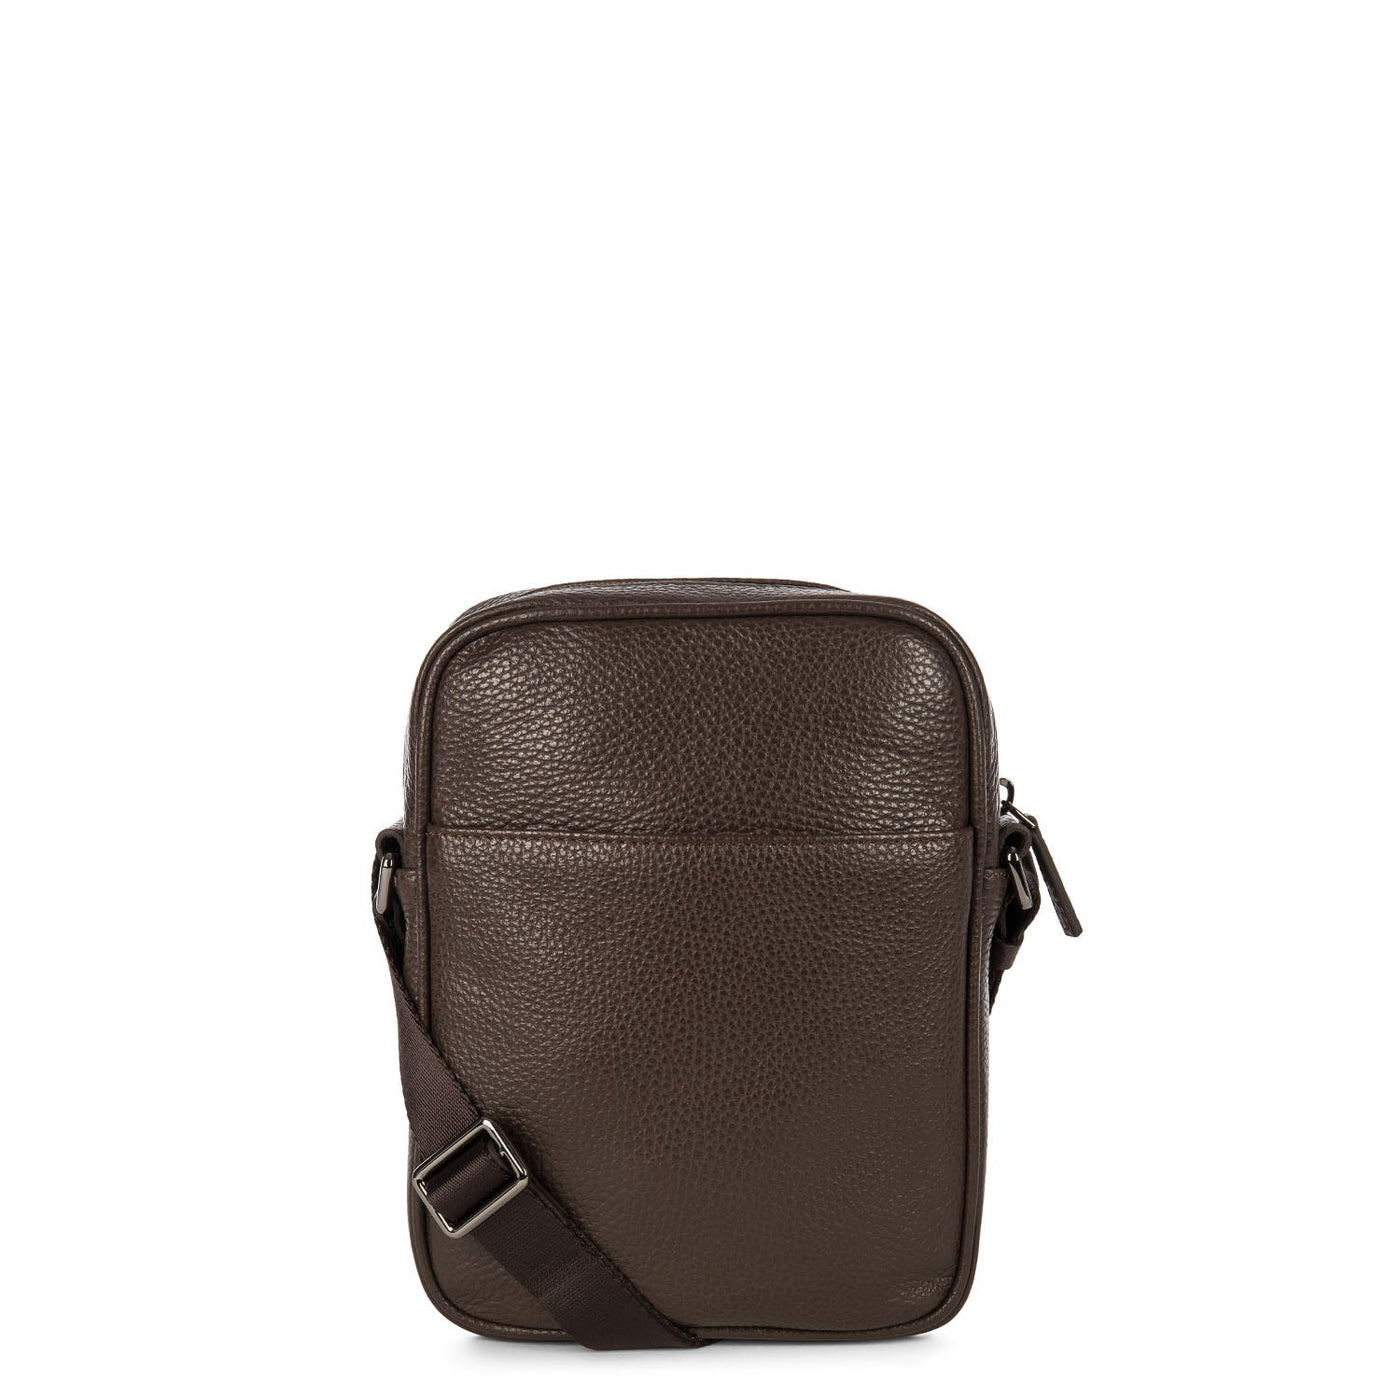 Kodiak Leather Denali Duffle Bag Review (Must Read Before Buying)